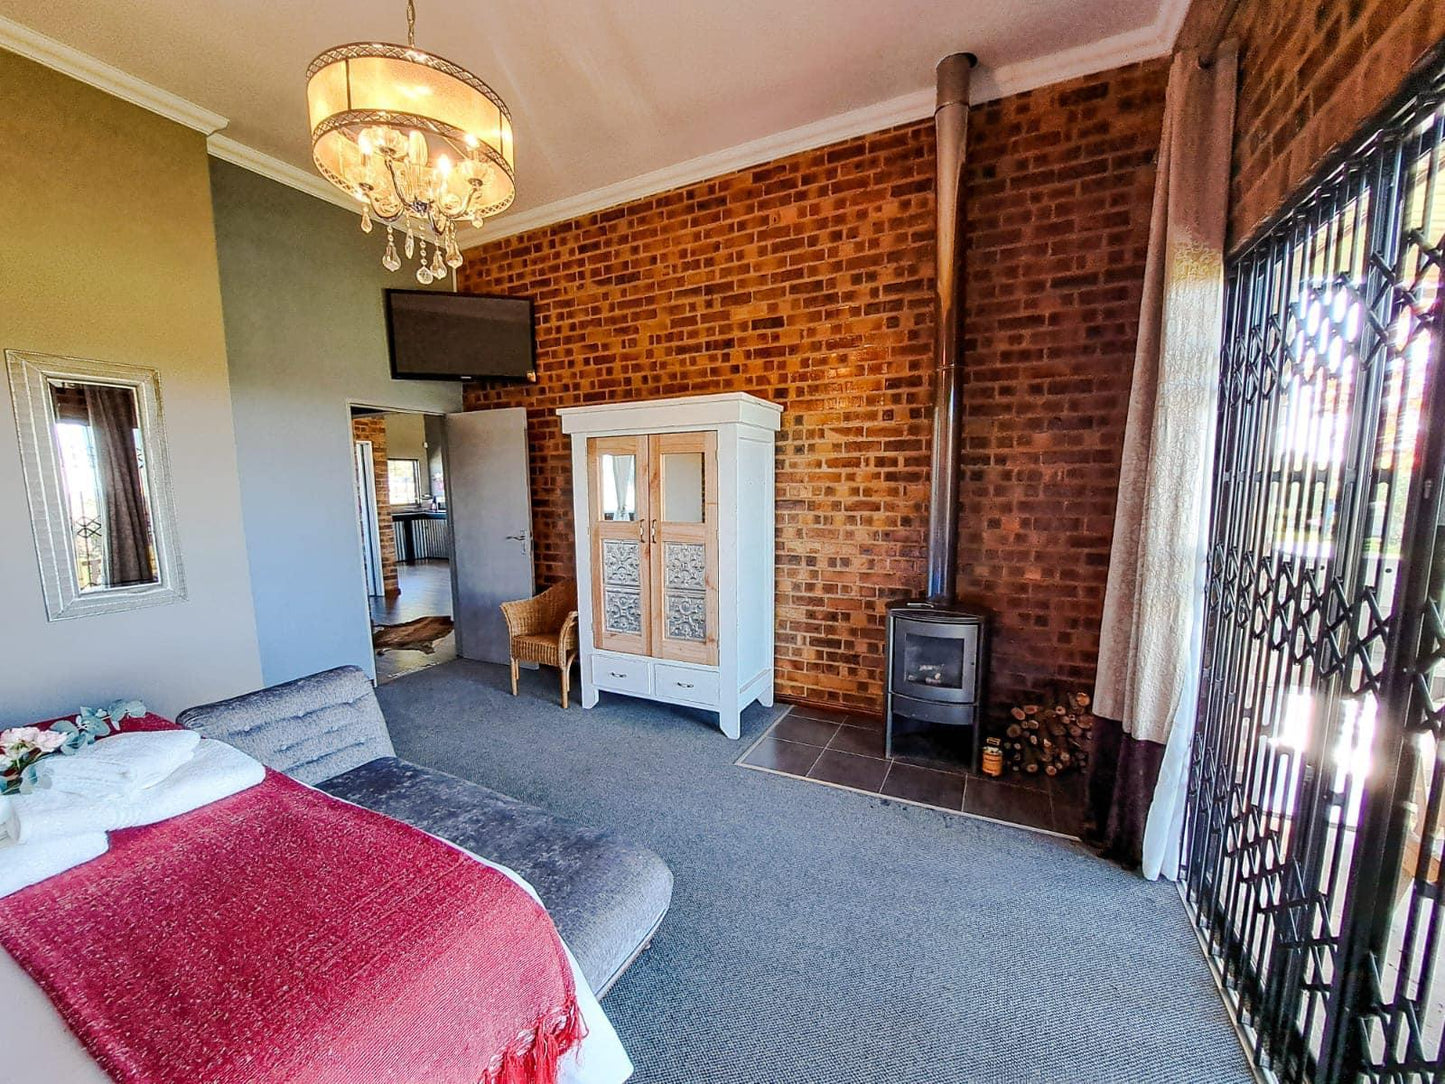 Two-bedroom Cottage @ Dullstroom Manor